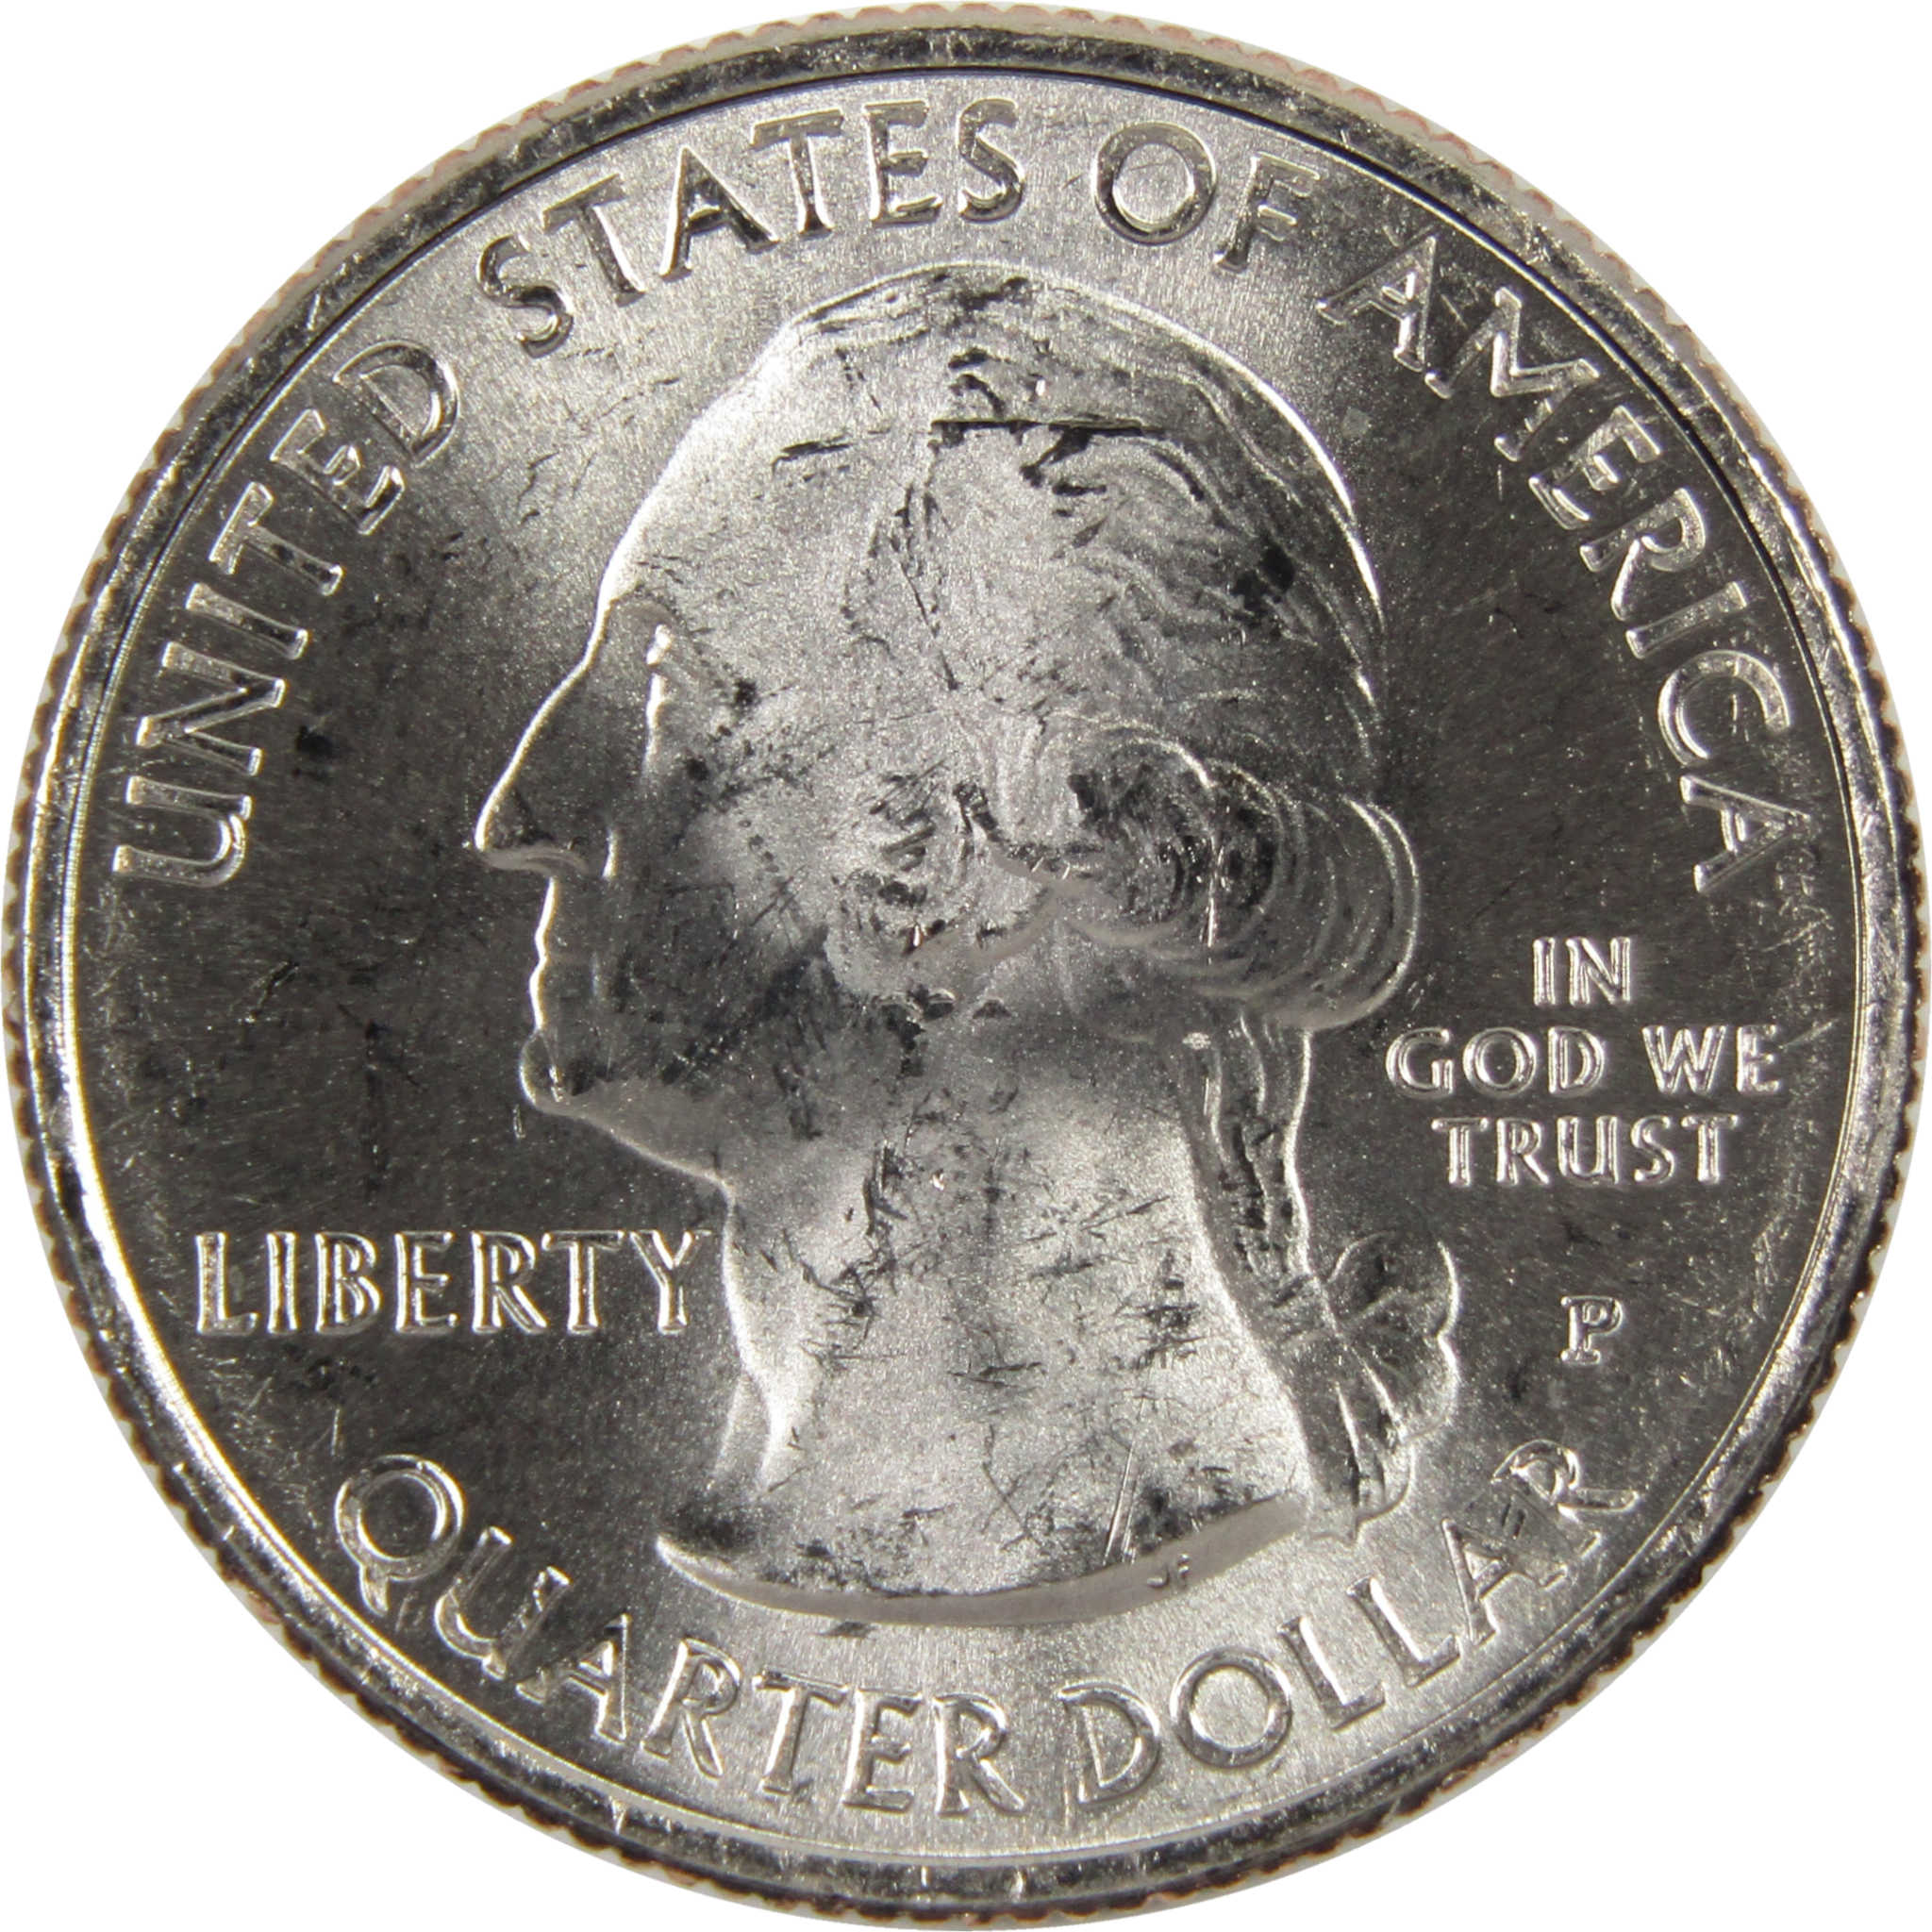 2020 P Salt River Bay National Park Quarter BU Uncirculated Clad Coin